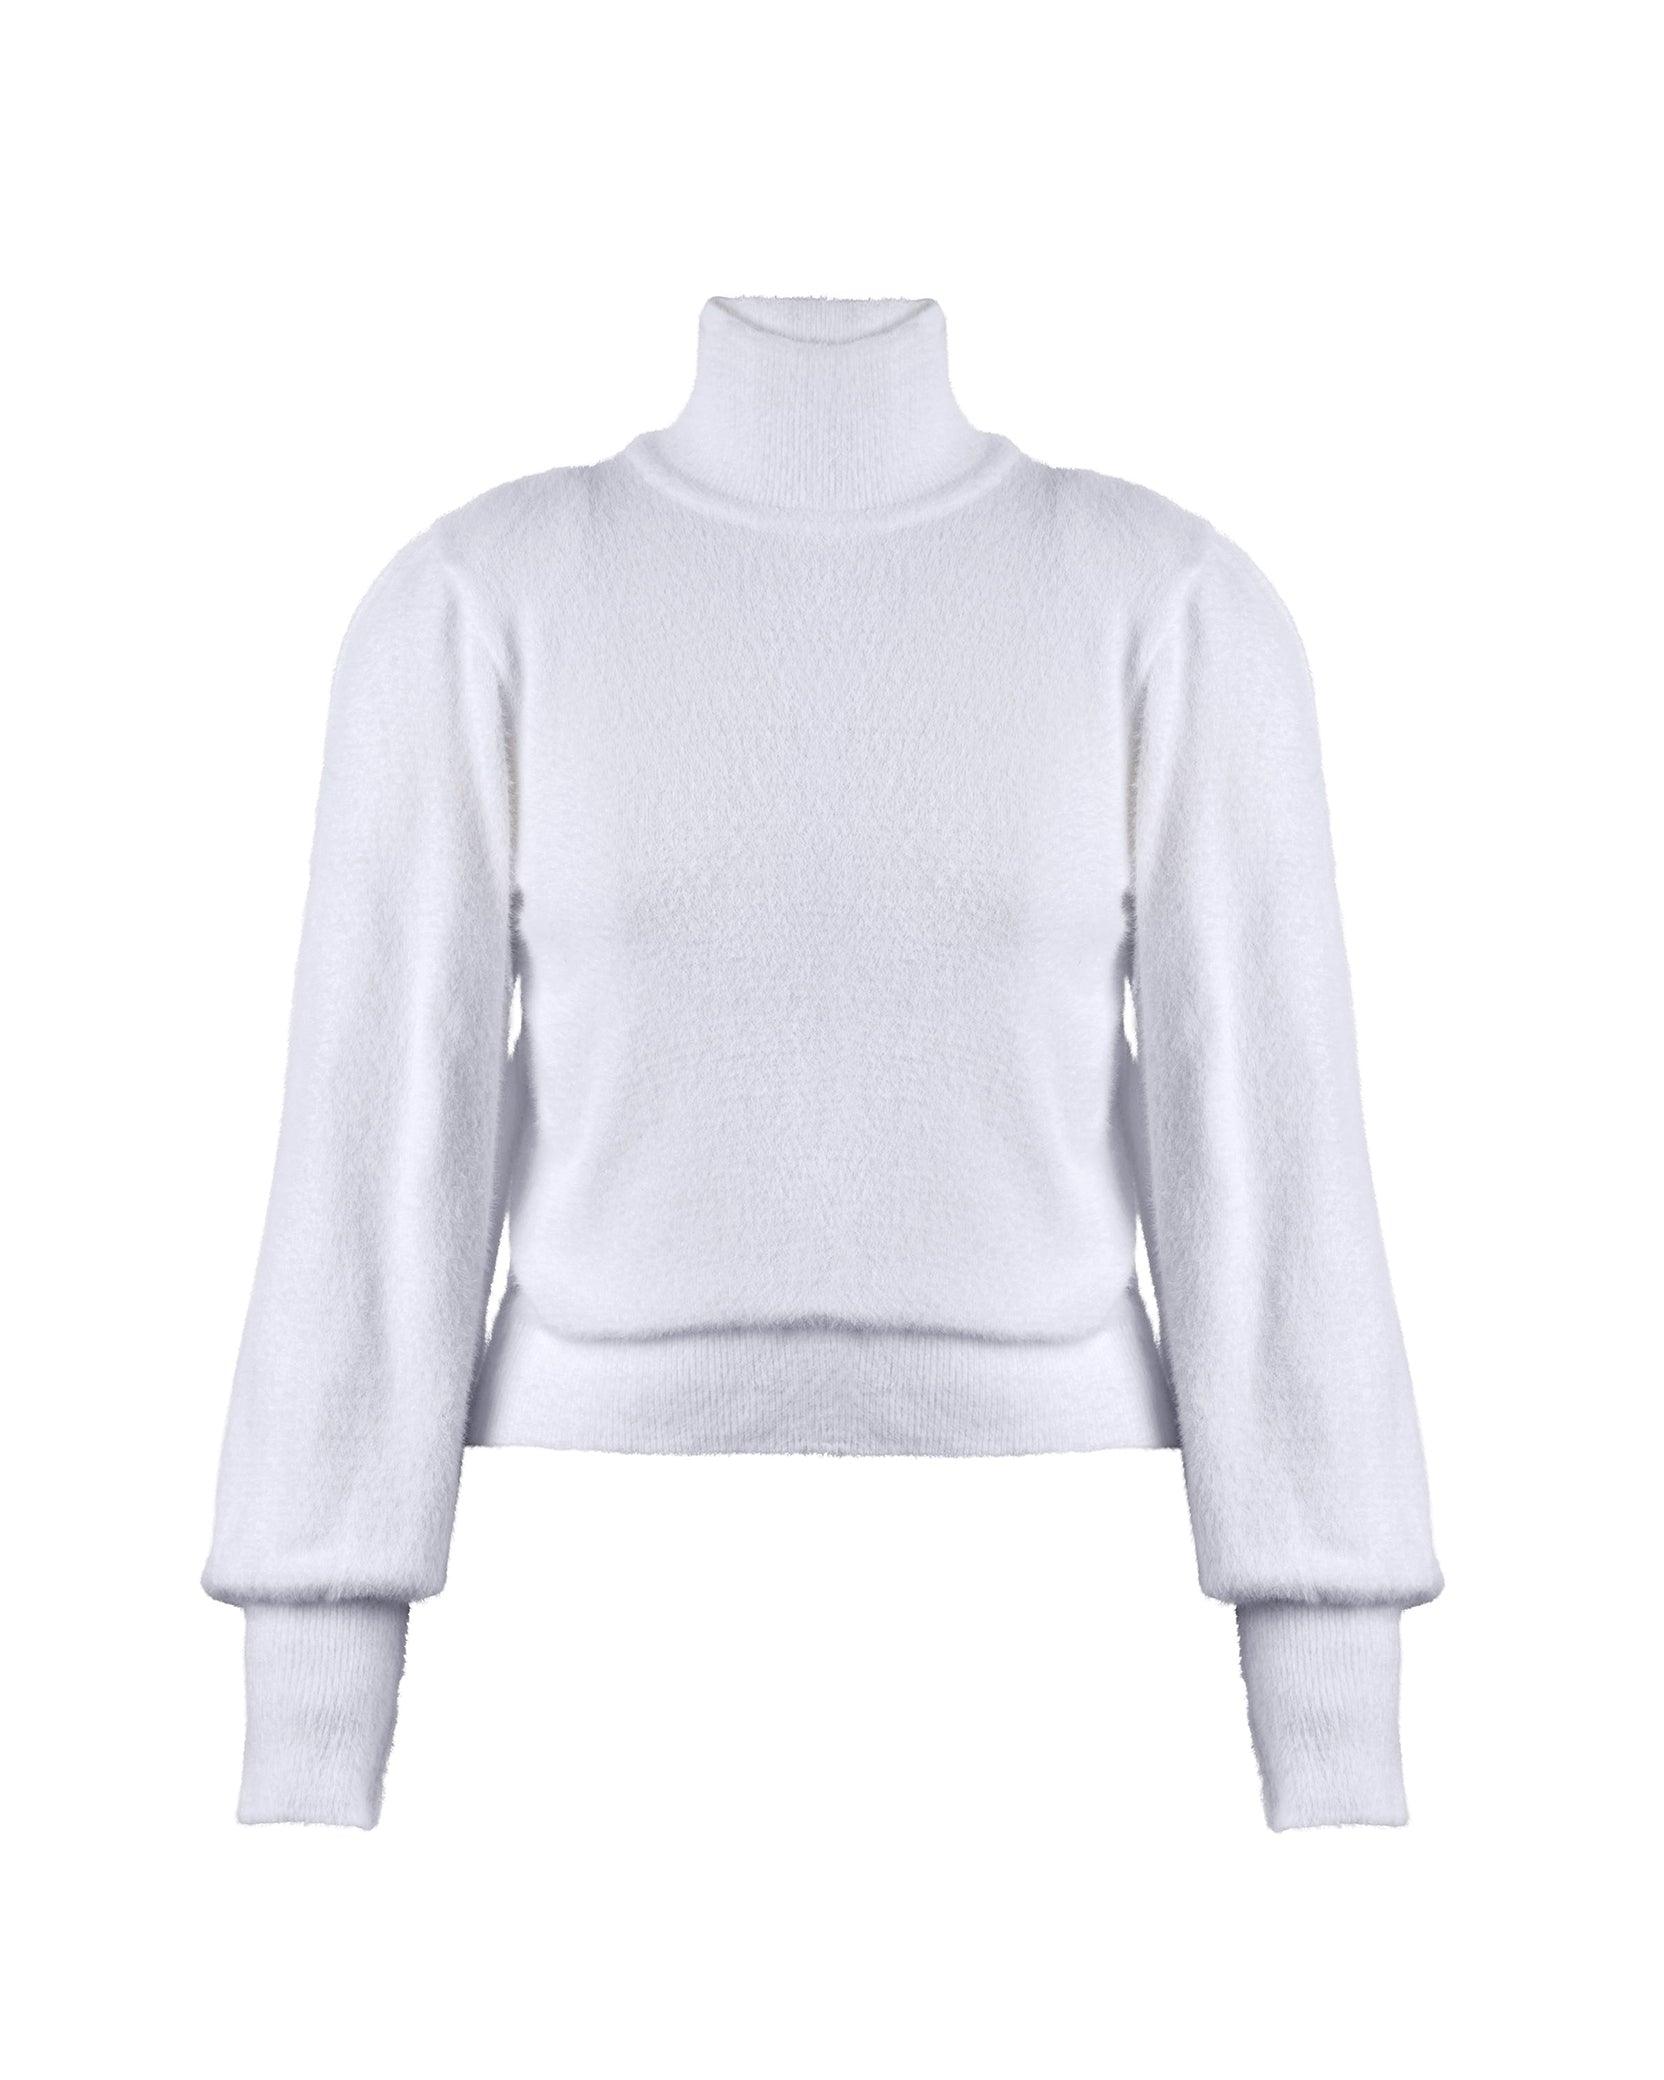 Blusa tricot fur off white - MES